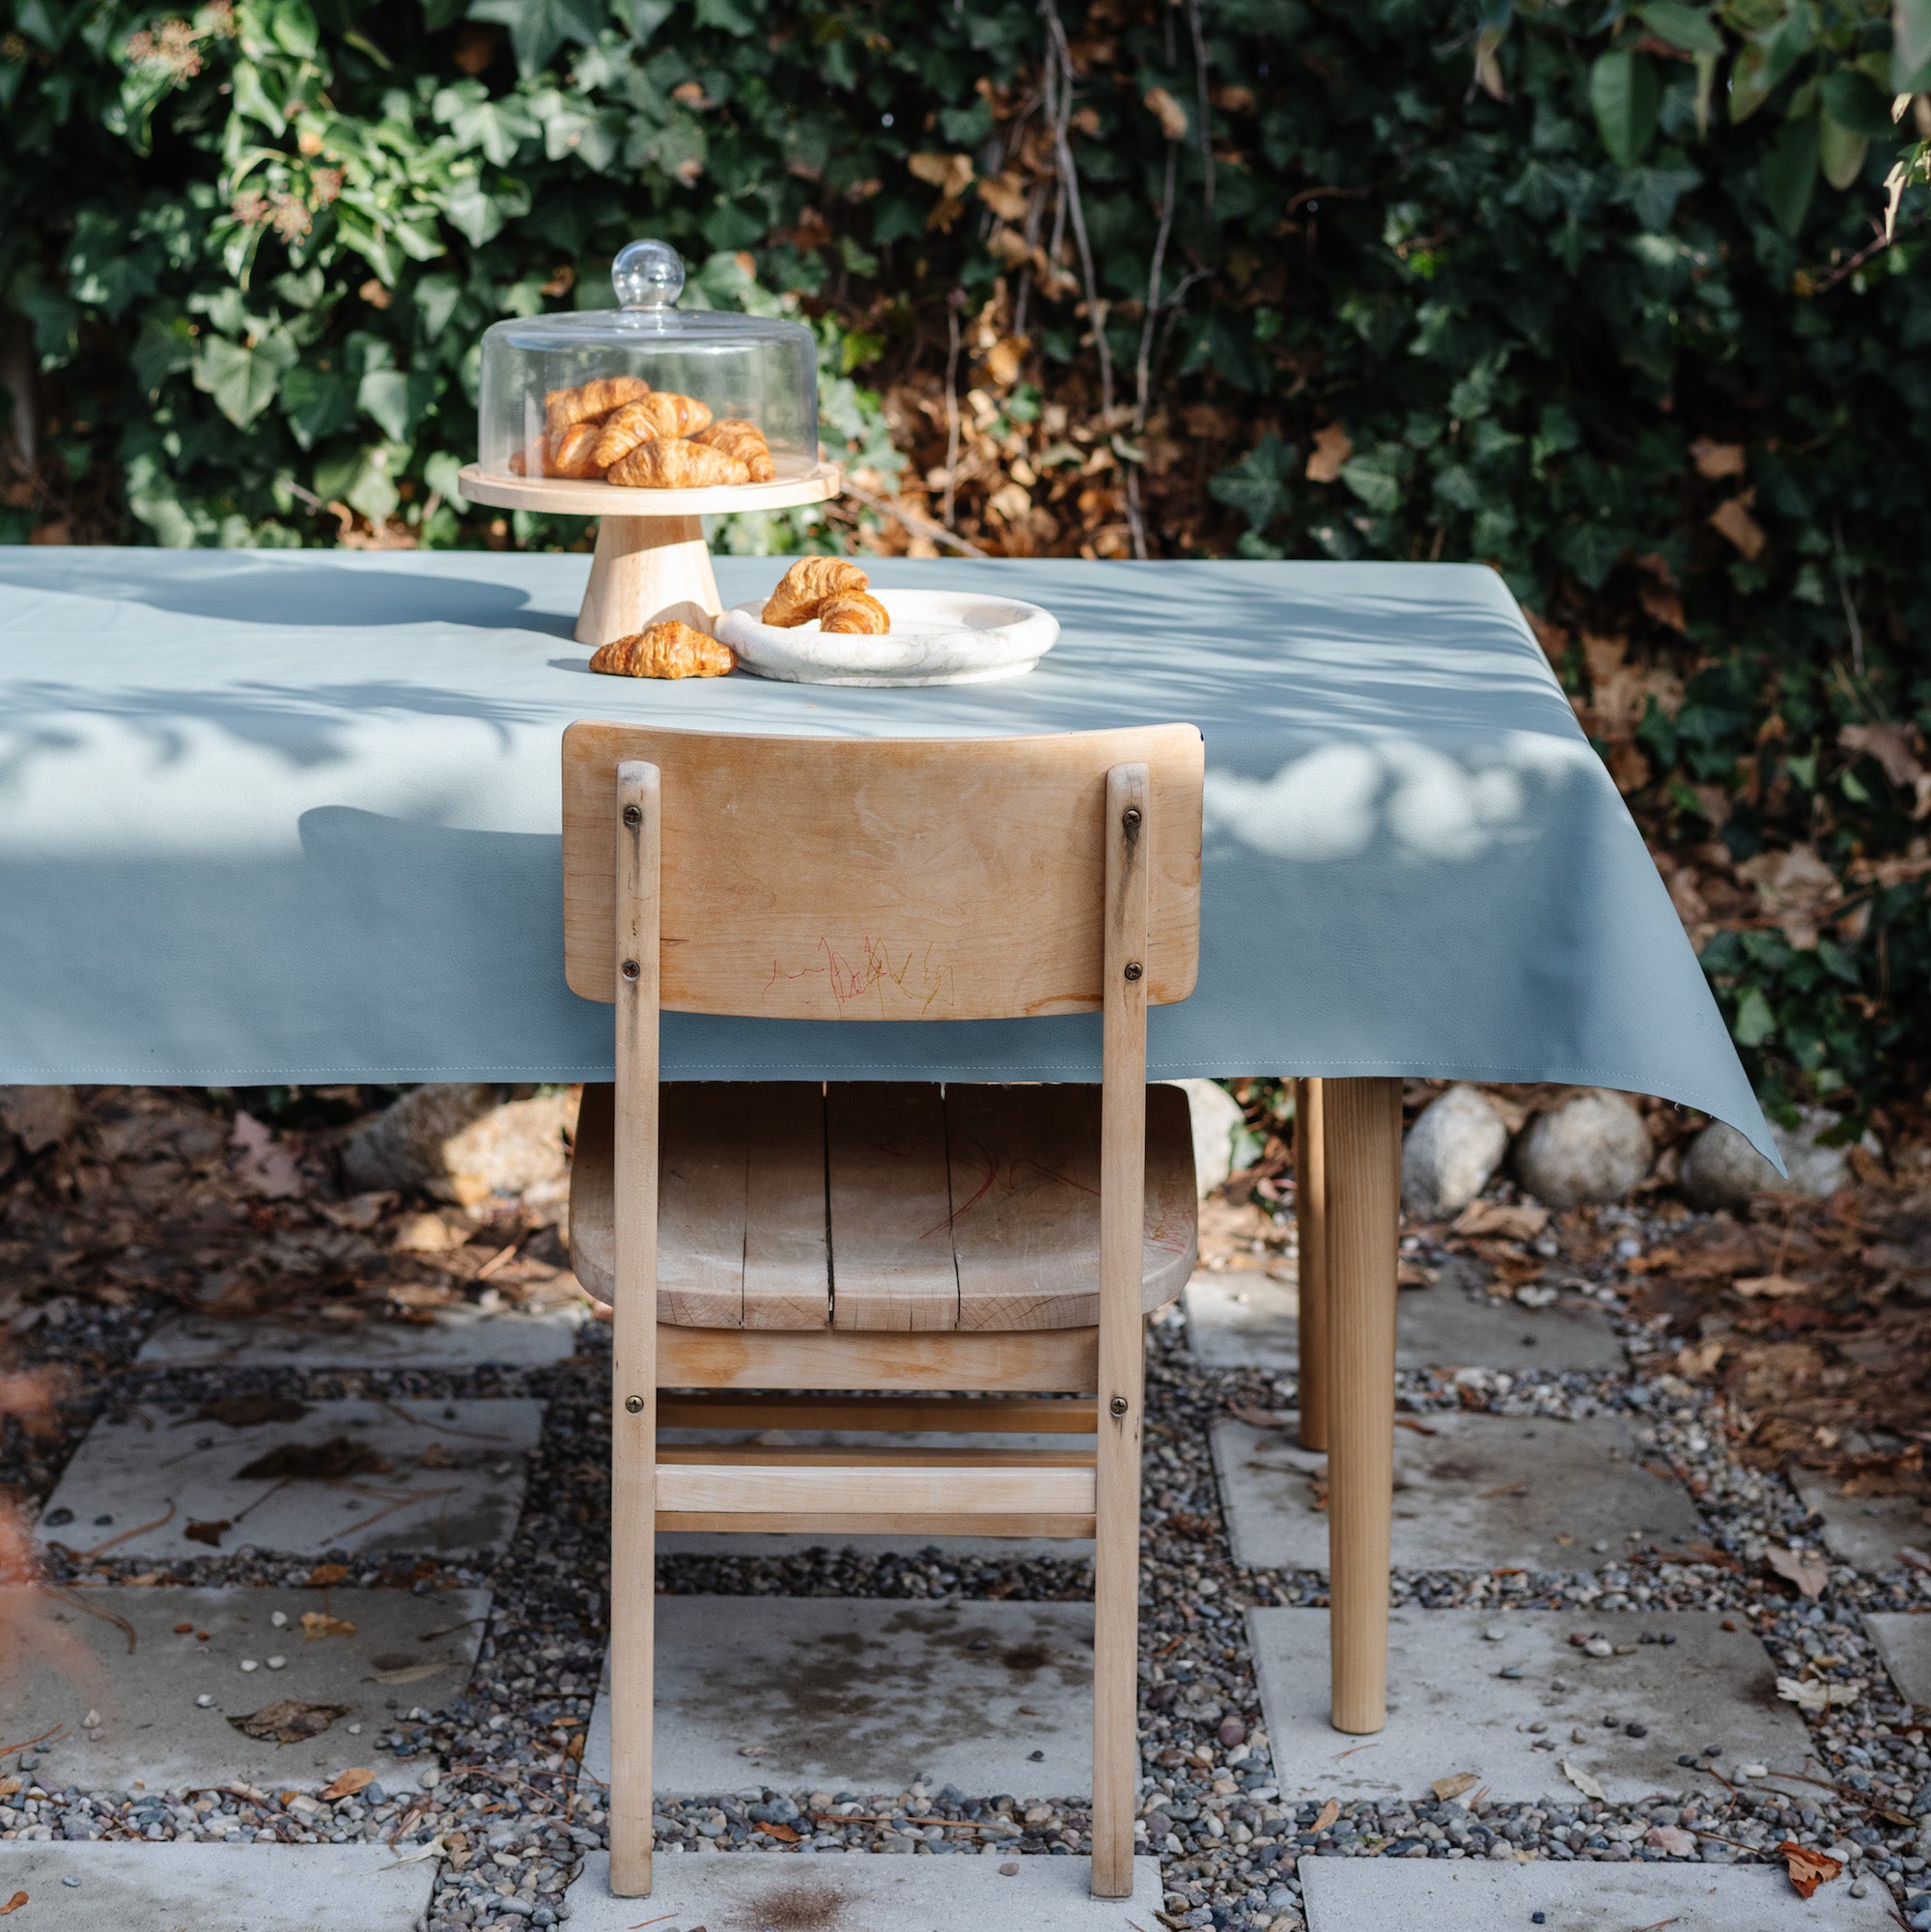 Amalfi / 8 Foot@Amalfi Tablecloth on a table outside near greenery